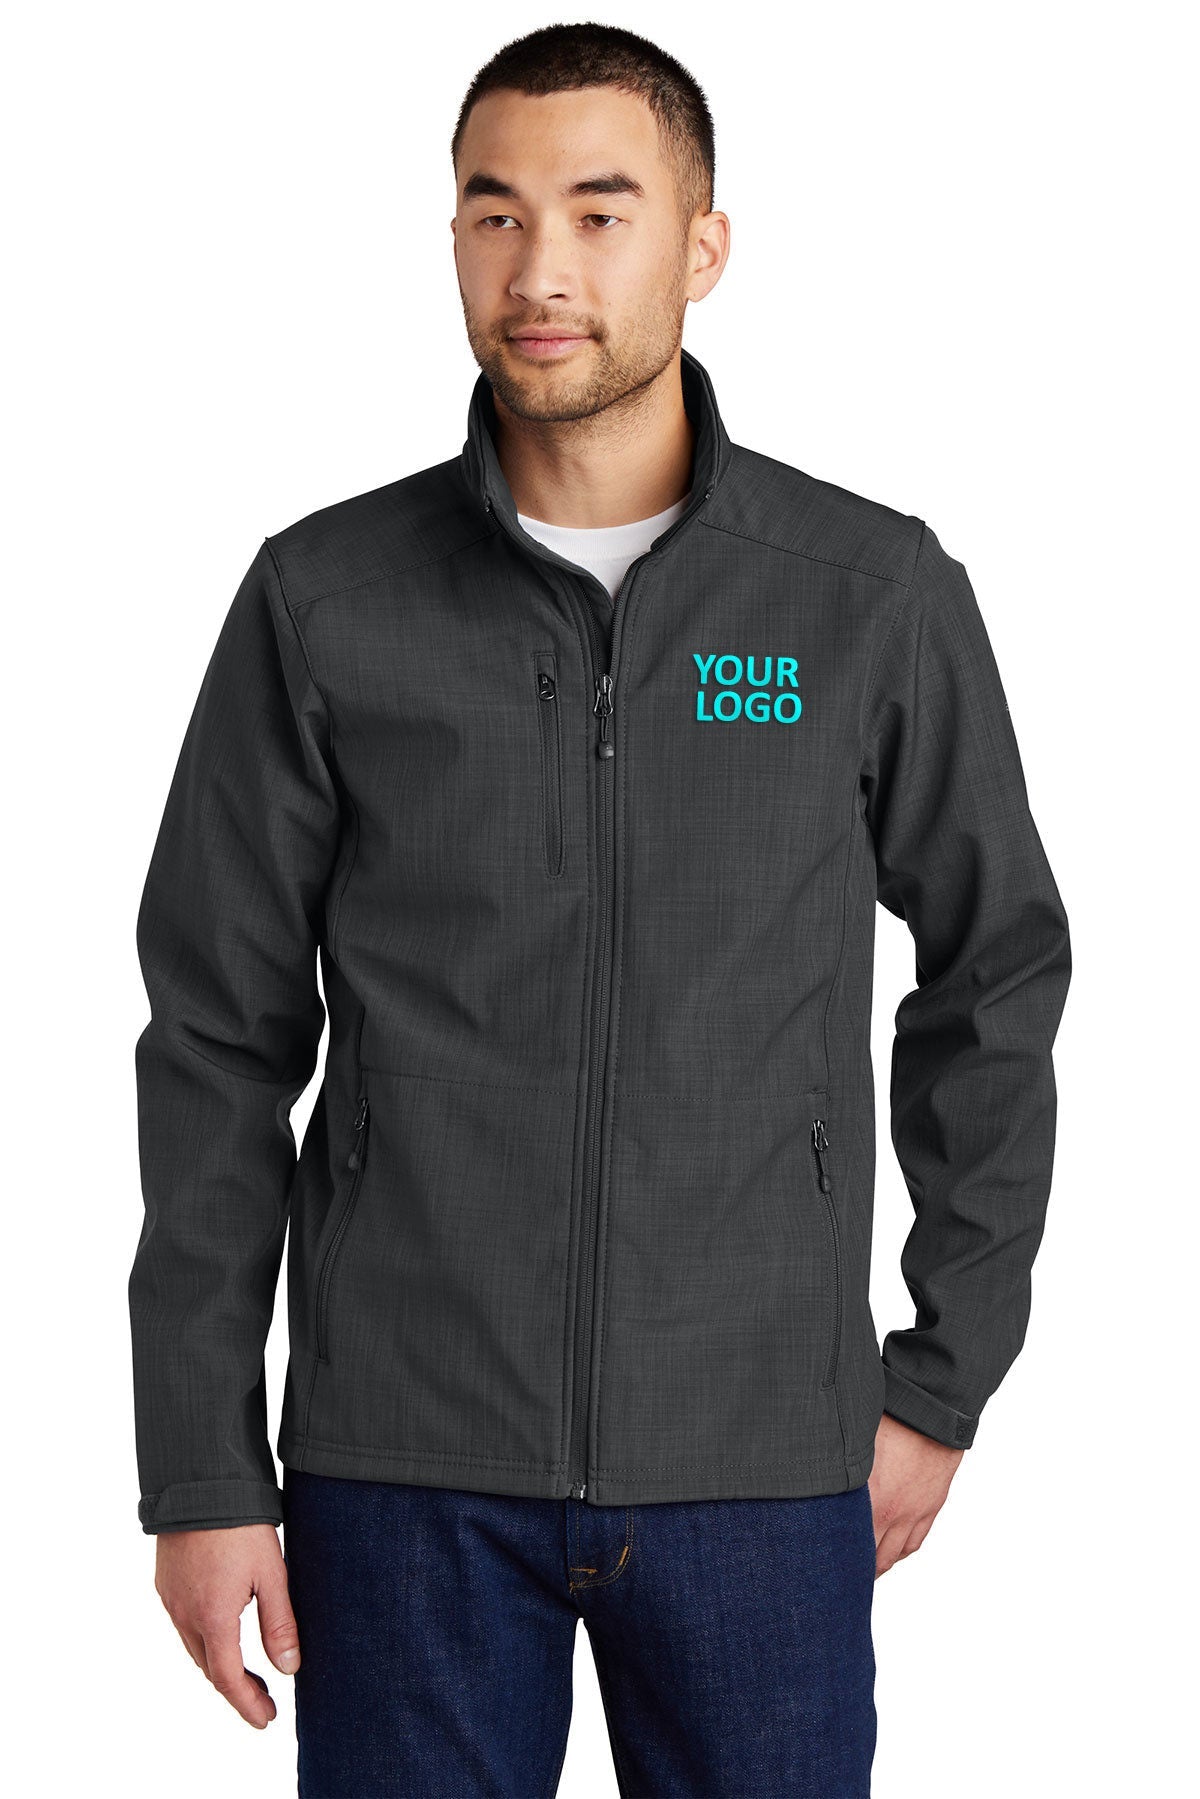 Eddie Bauer Grey EB532 company jackets with logo